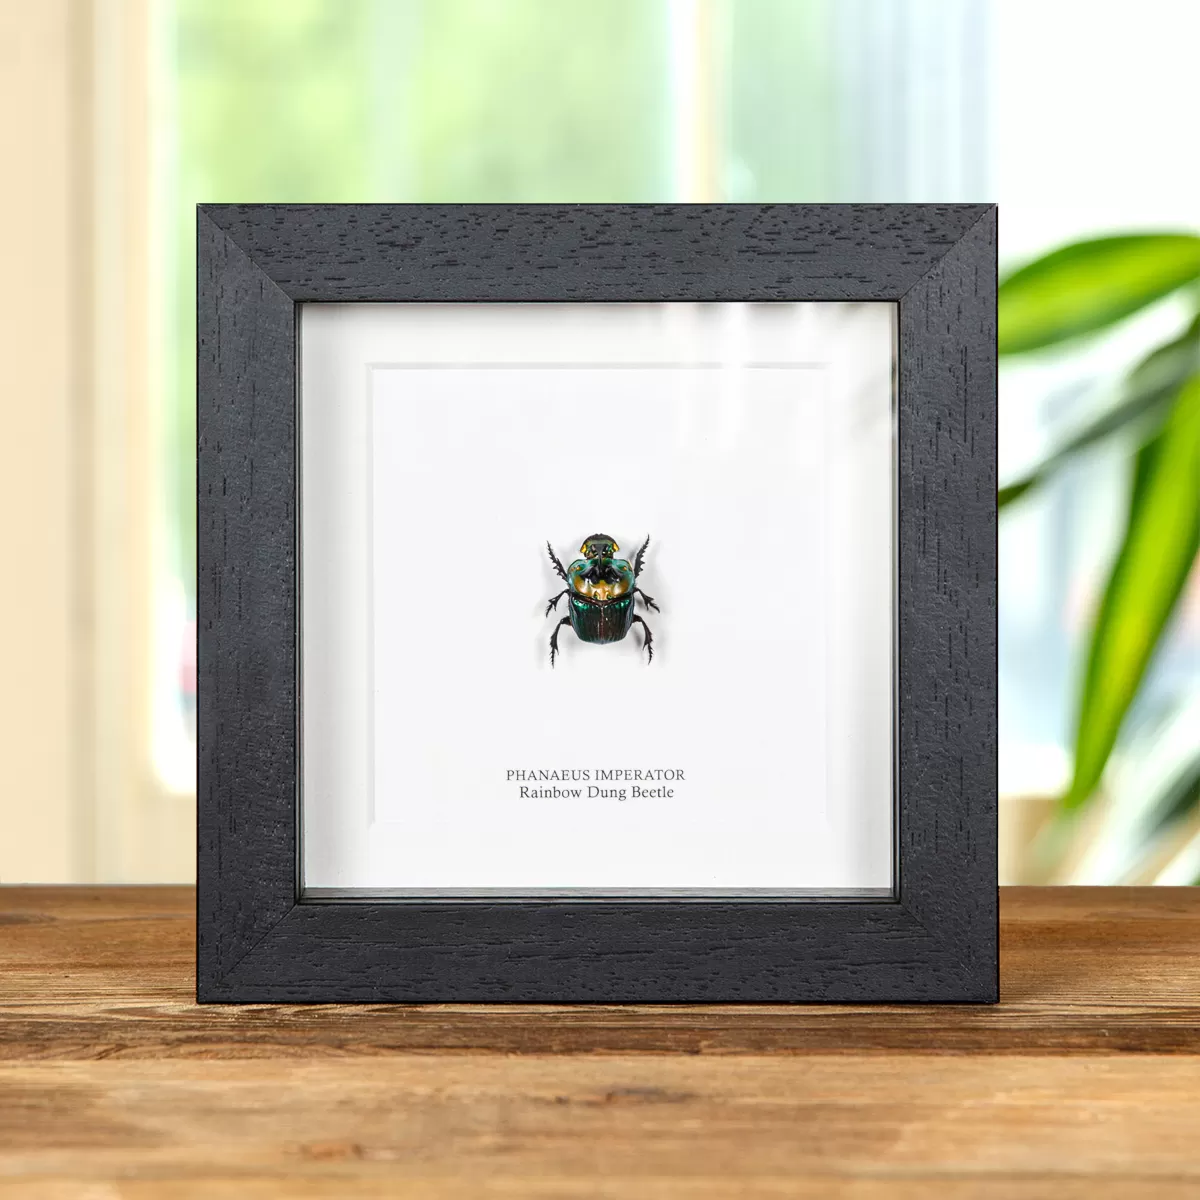 Minibeast Rainbow Dung Beetle In Box Frame (Phanaeus imperator)